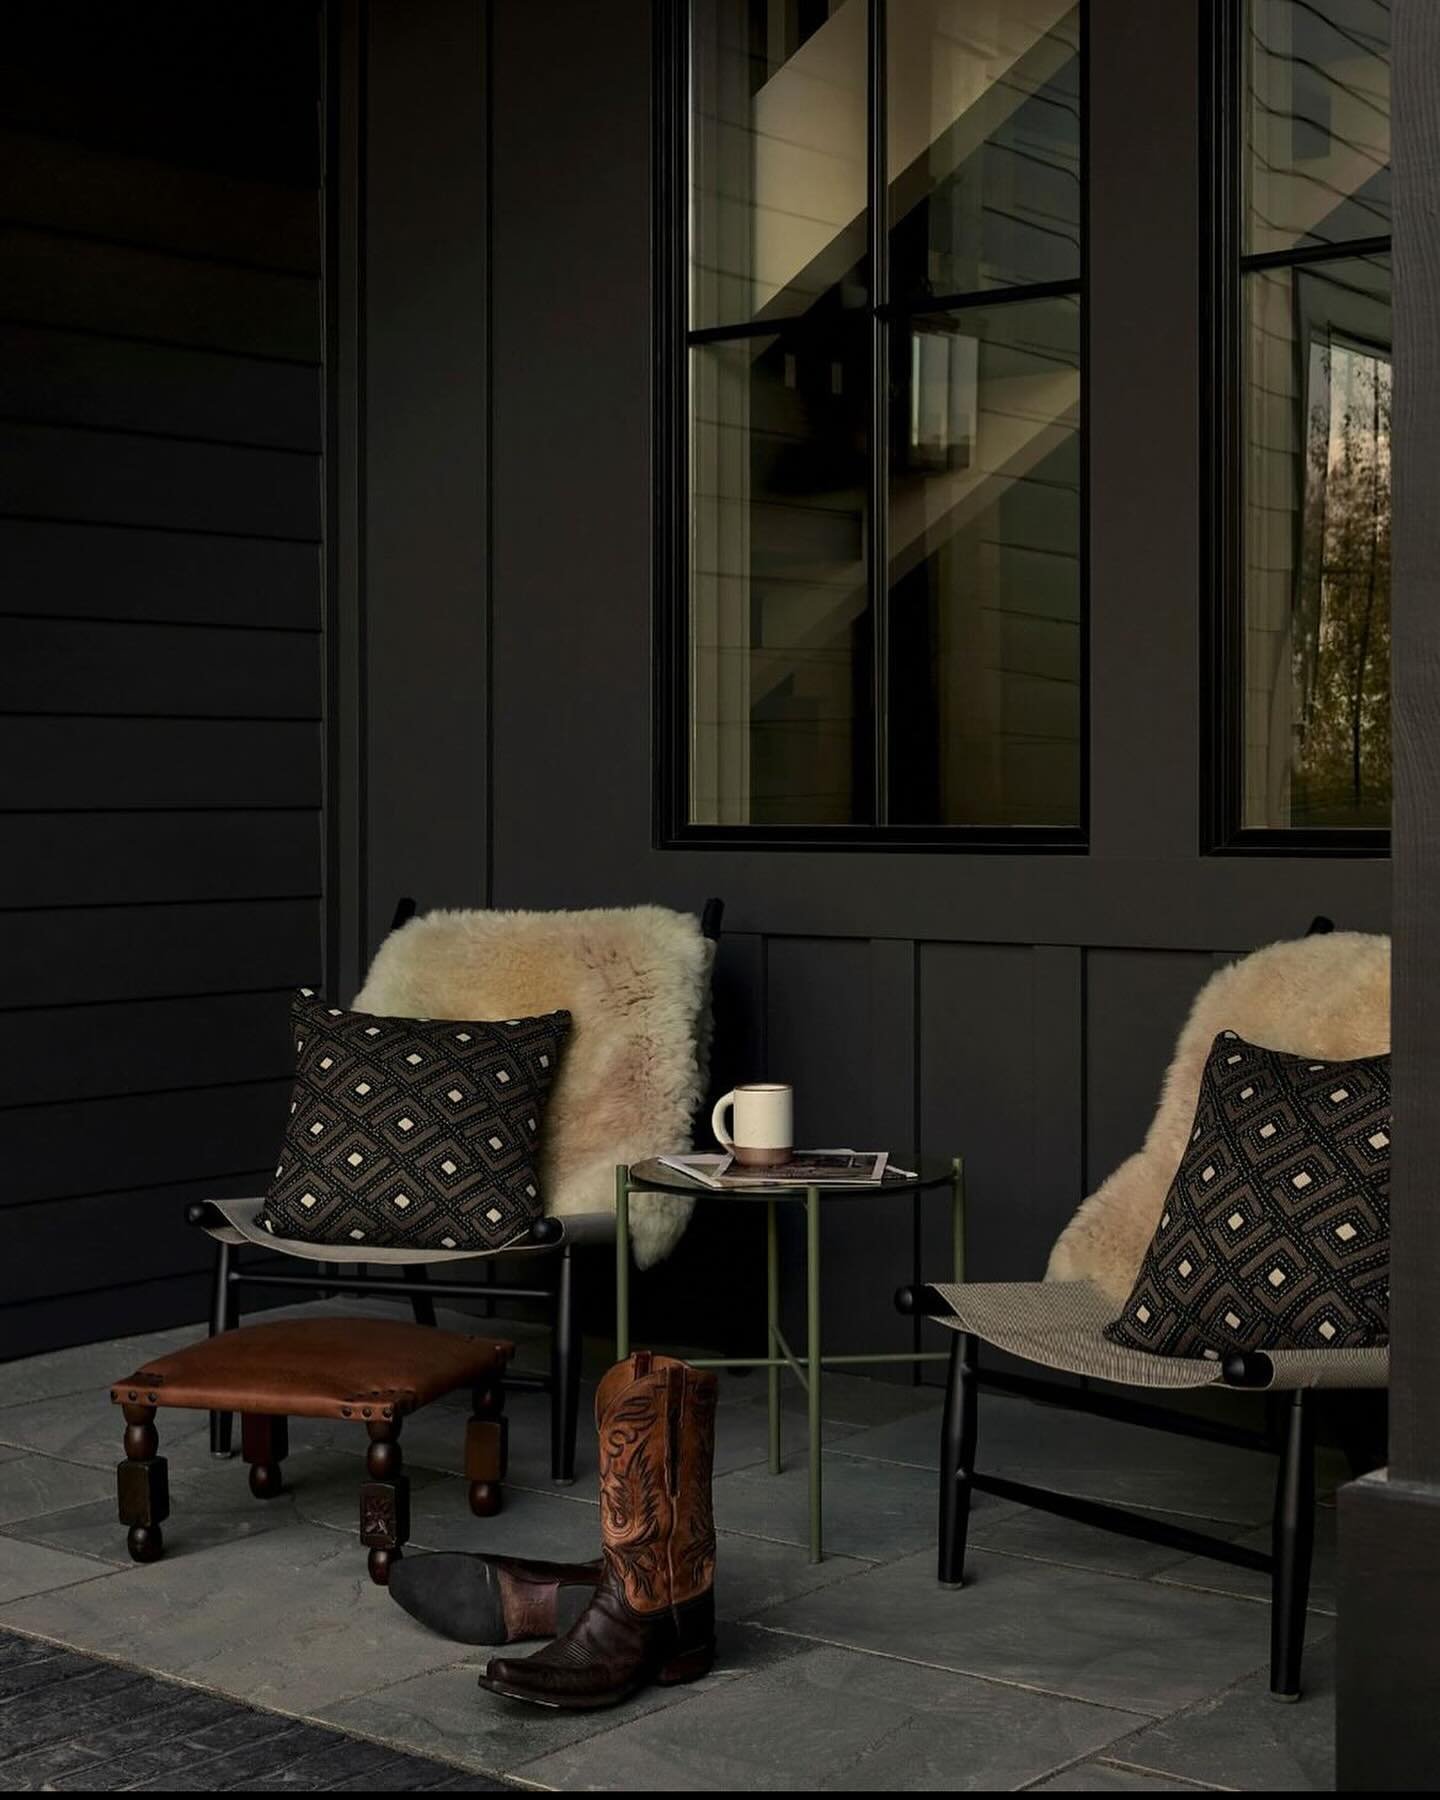 Our kind of porch sitting.👌🏽
.
.
.
.
Design: @susannahholmbergstudios